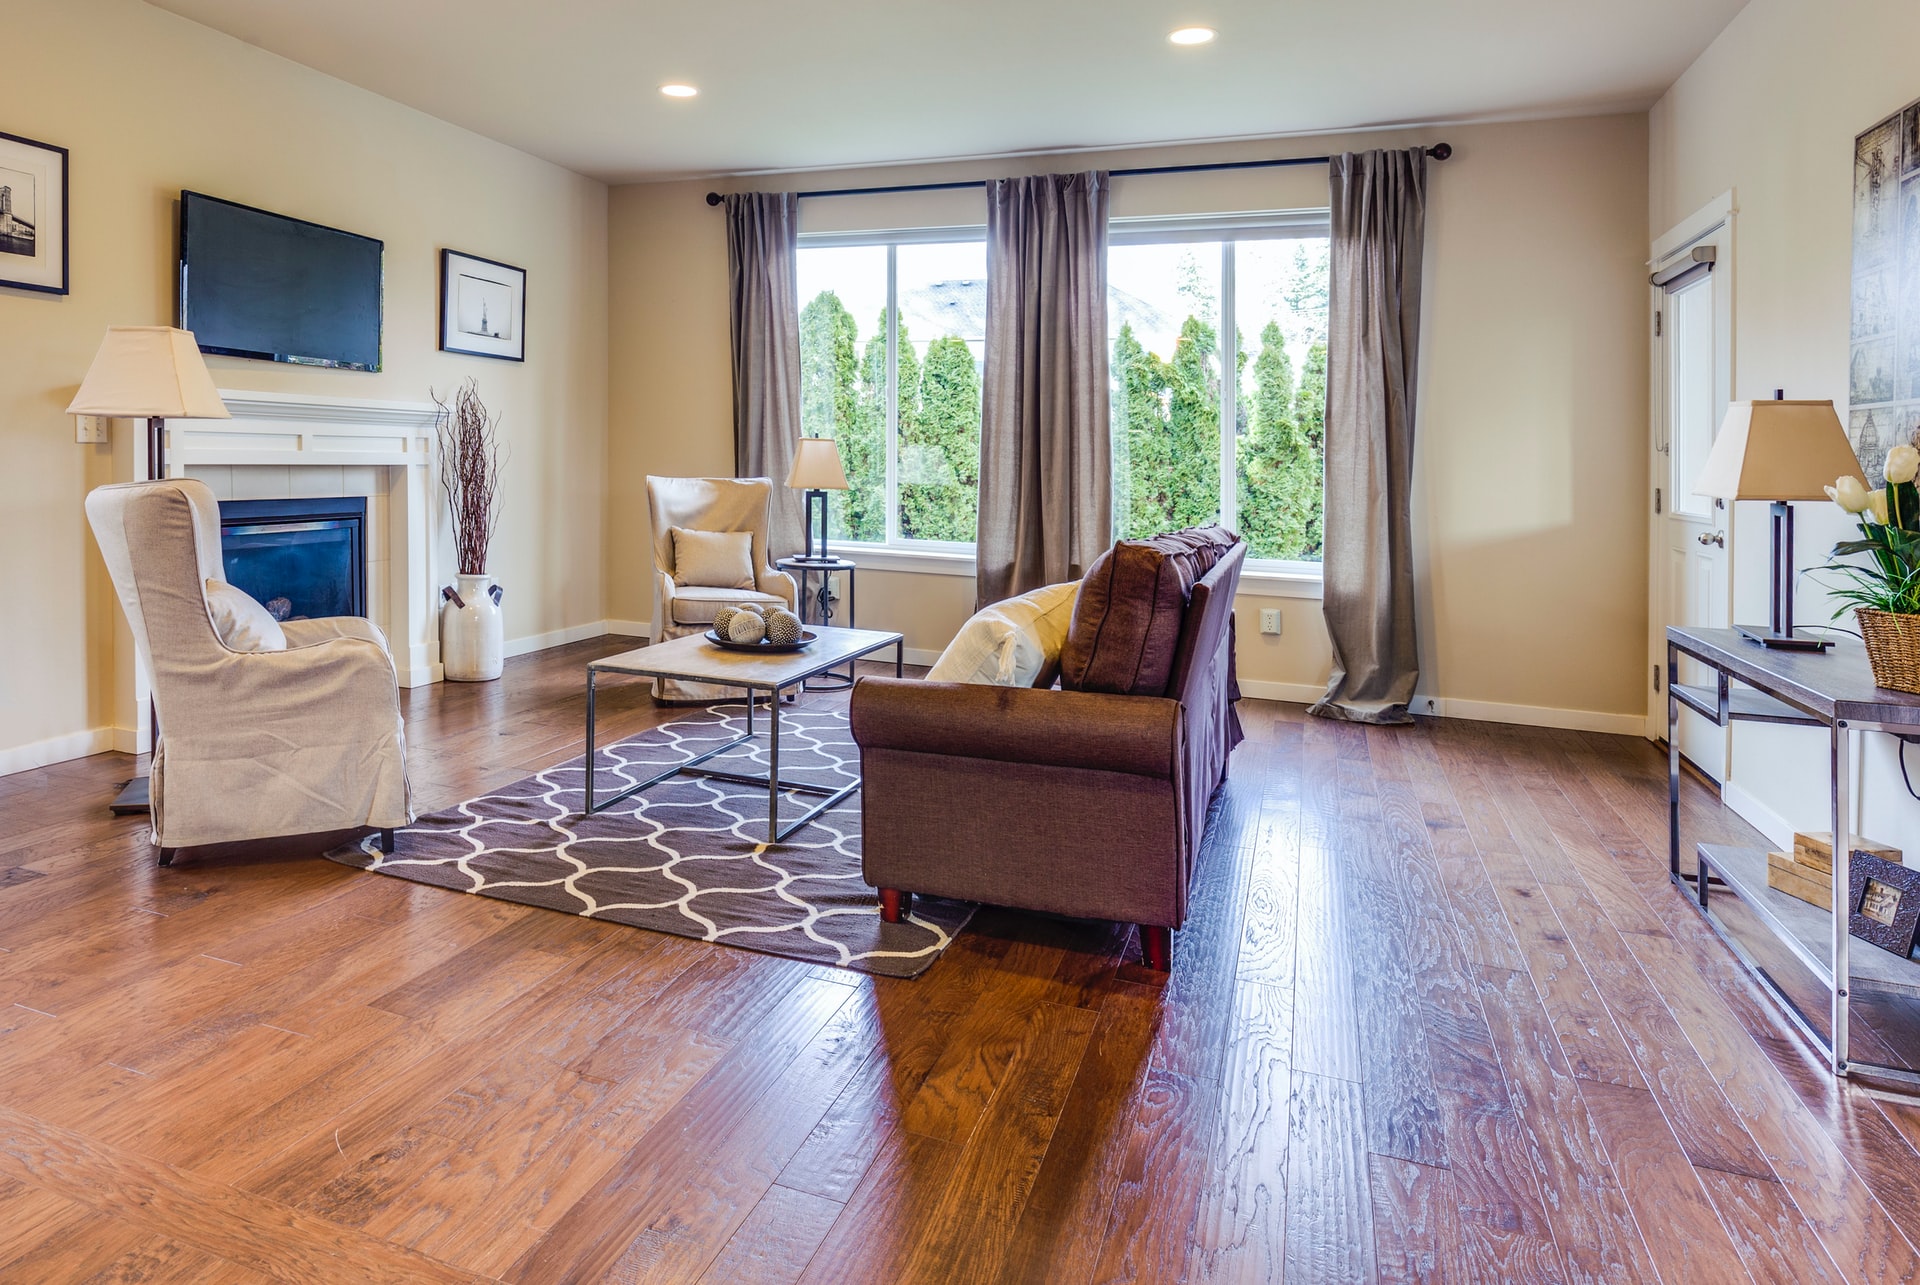 Living room with hardwood floors